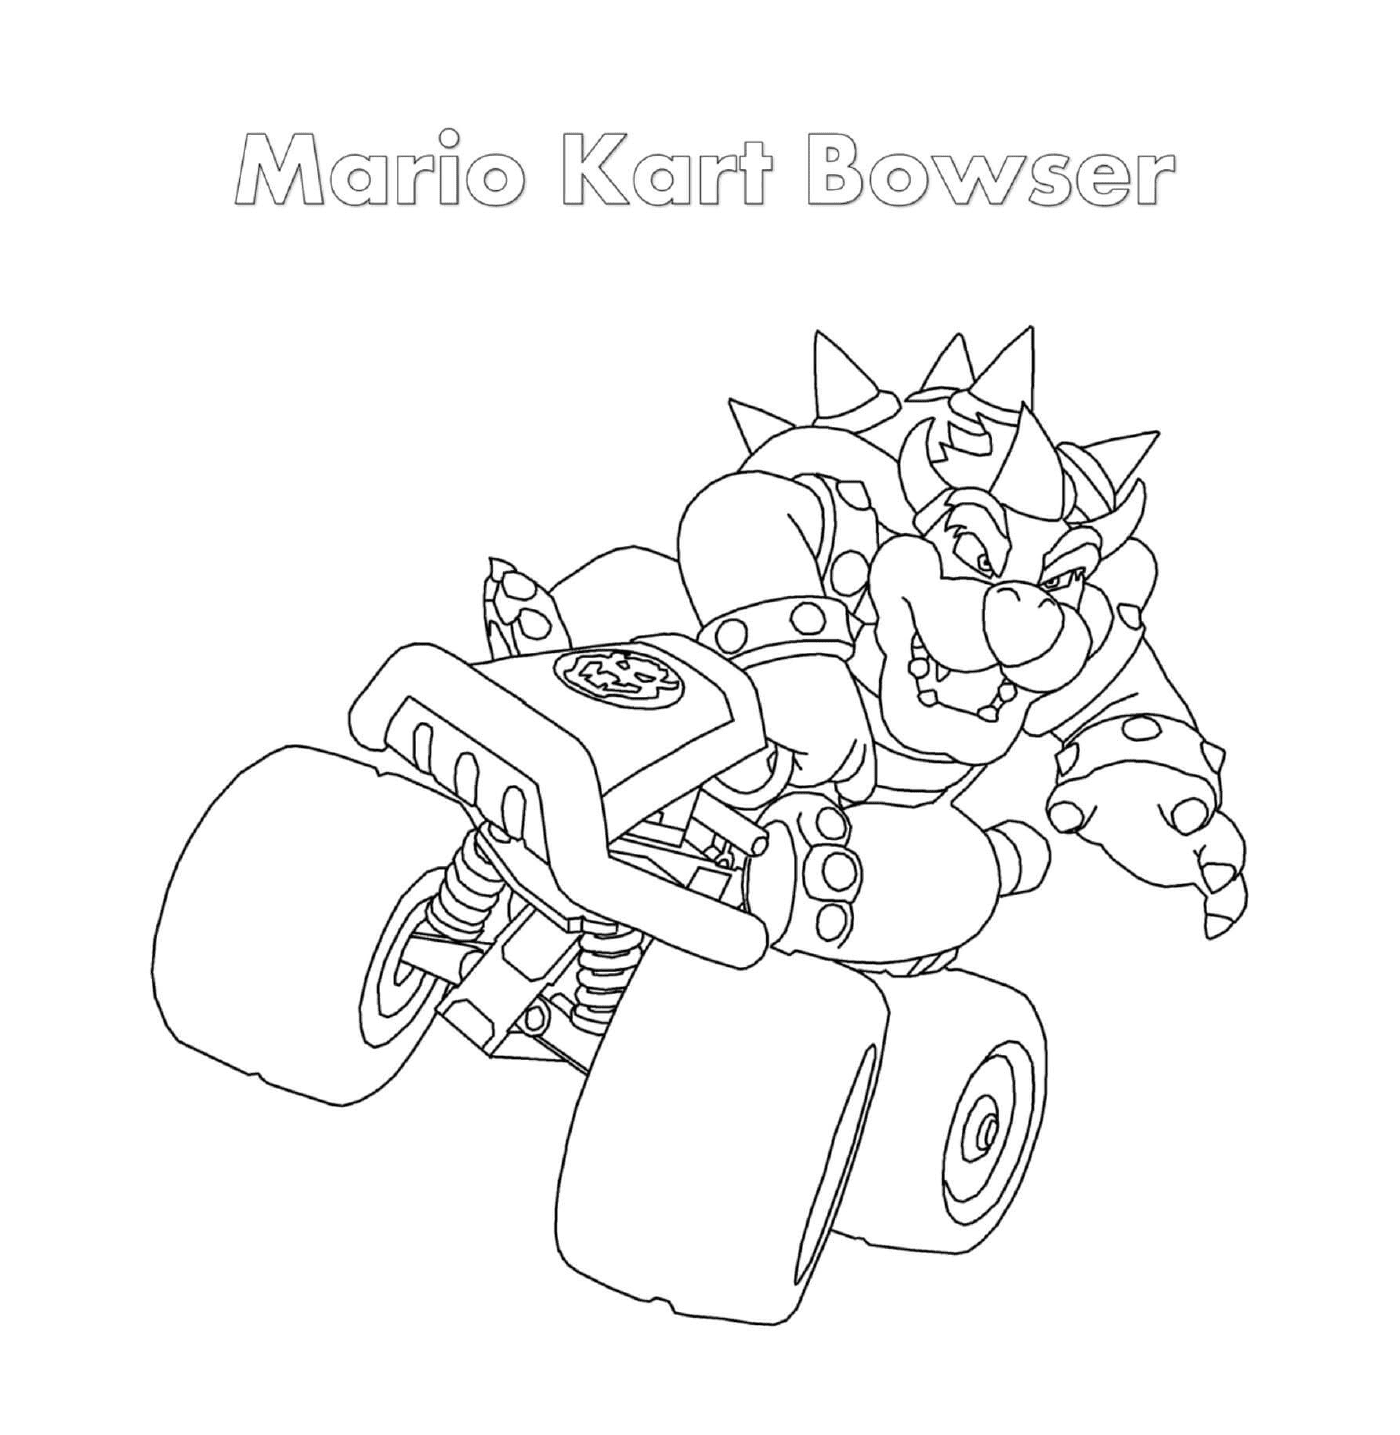  Bowser in Mario Kart 